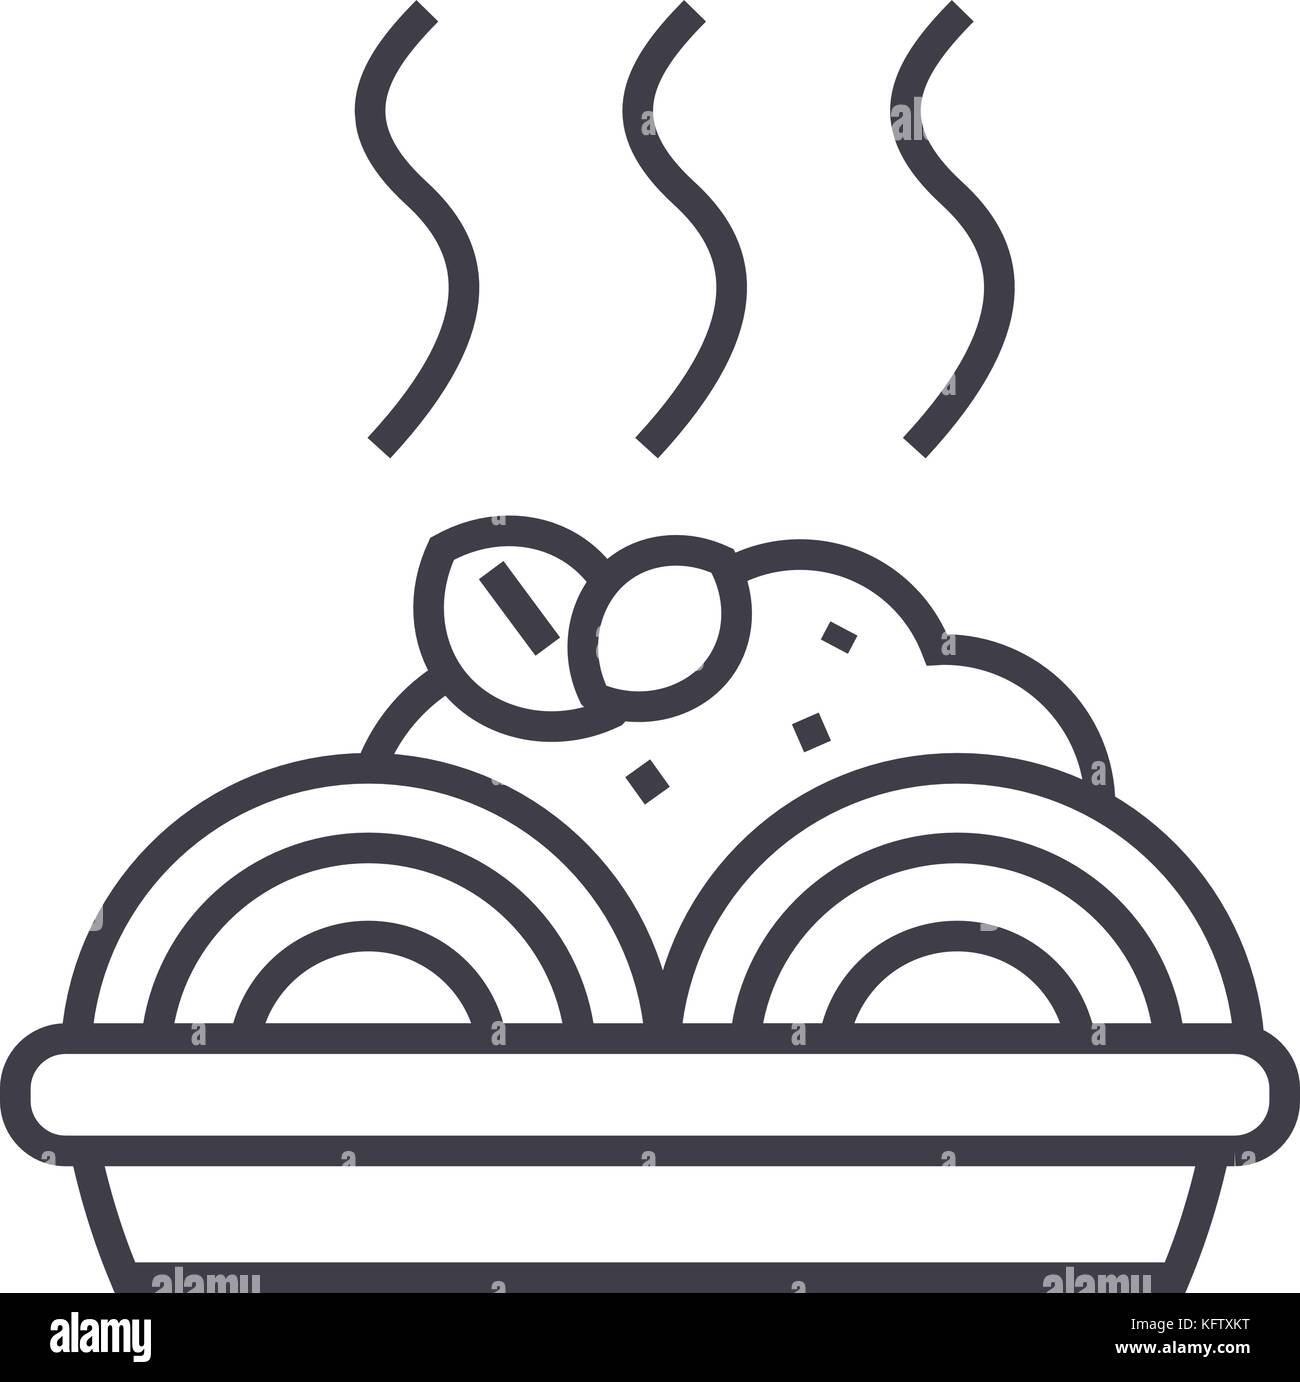 porridge with meatballs vector line icon, sign, illustration on background, editable strokes Stock Vector